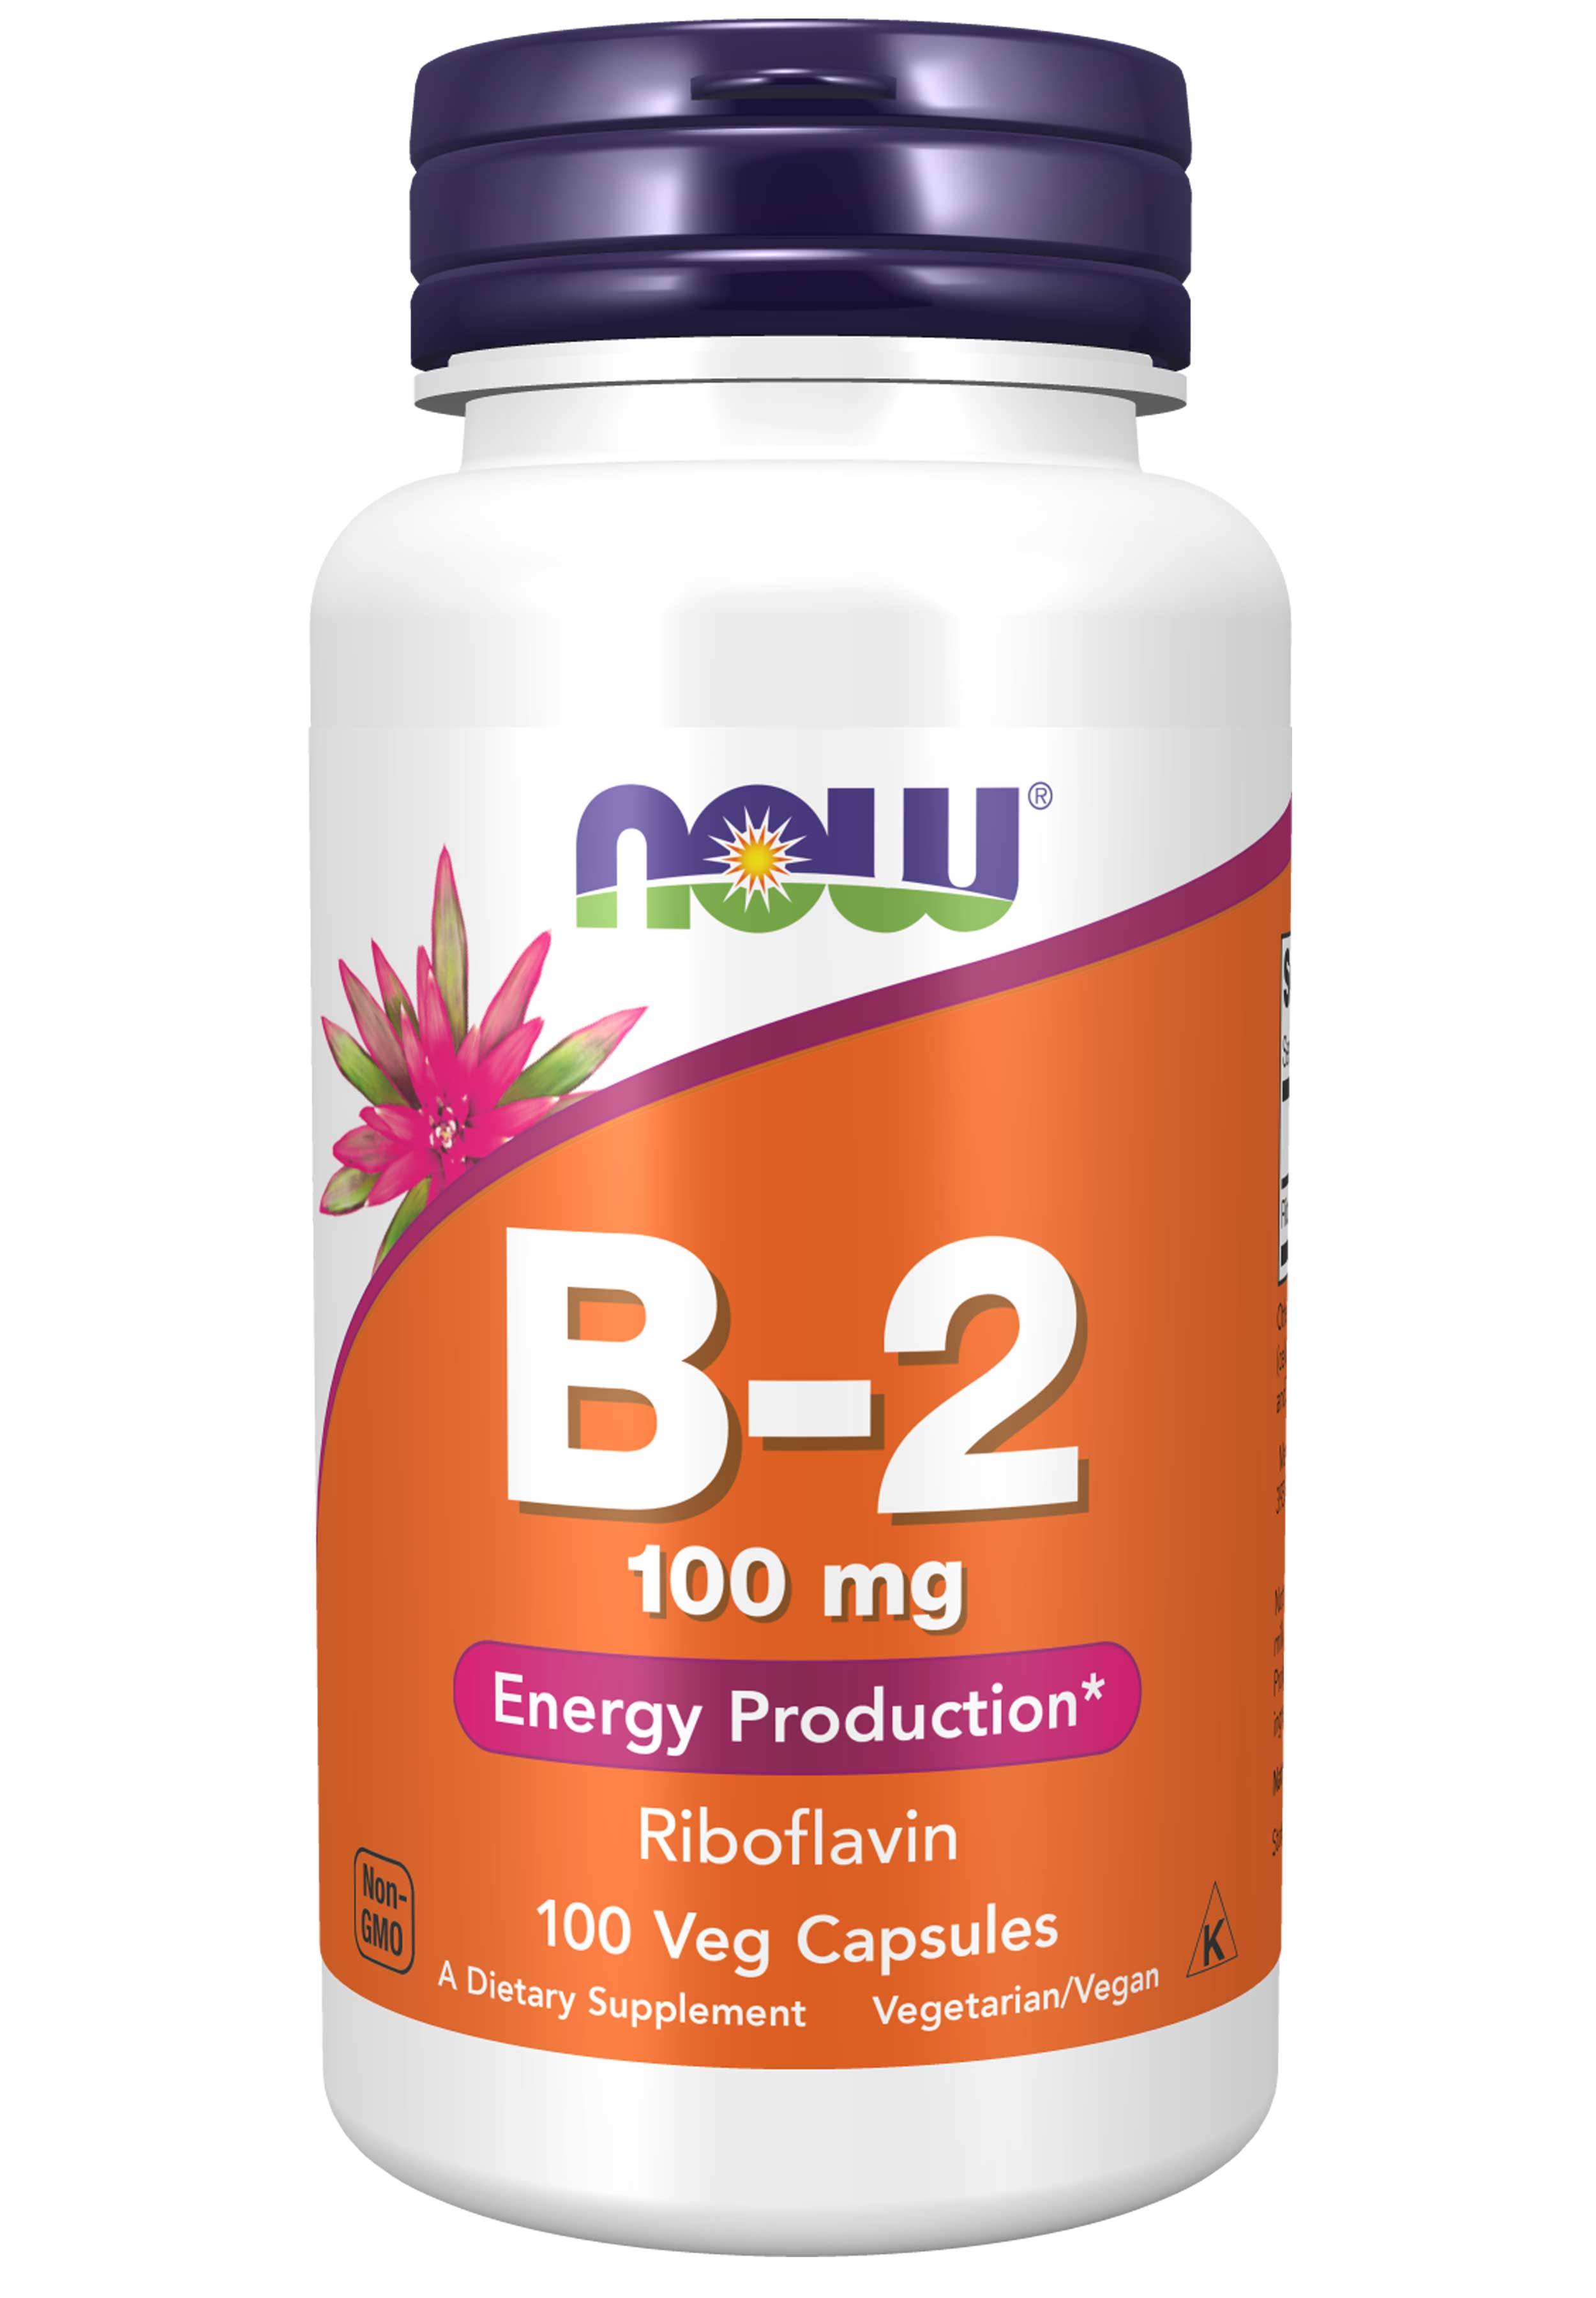 Now B-2 100 mg